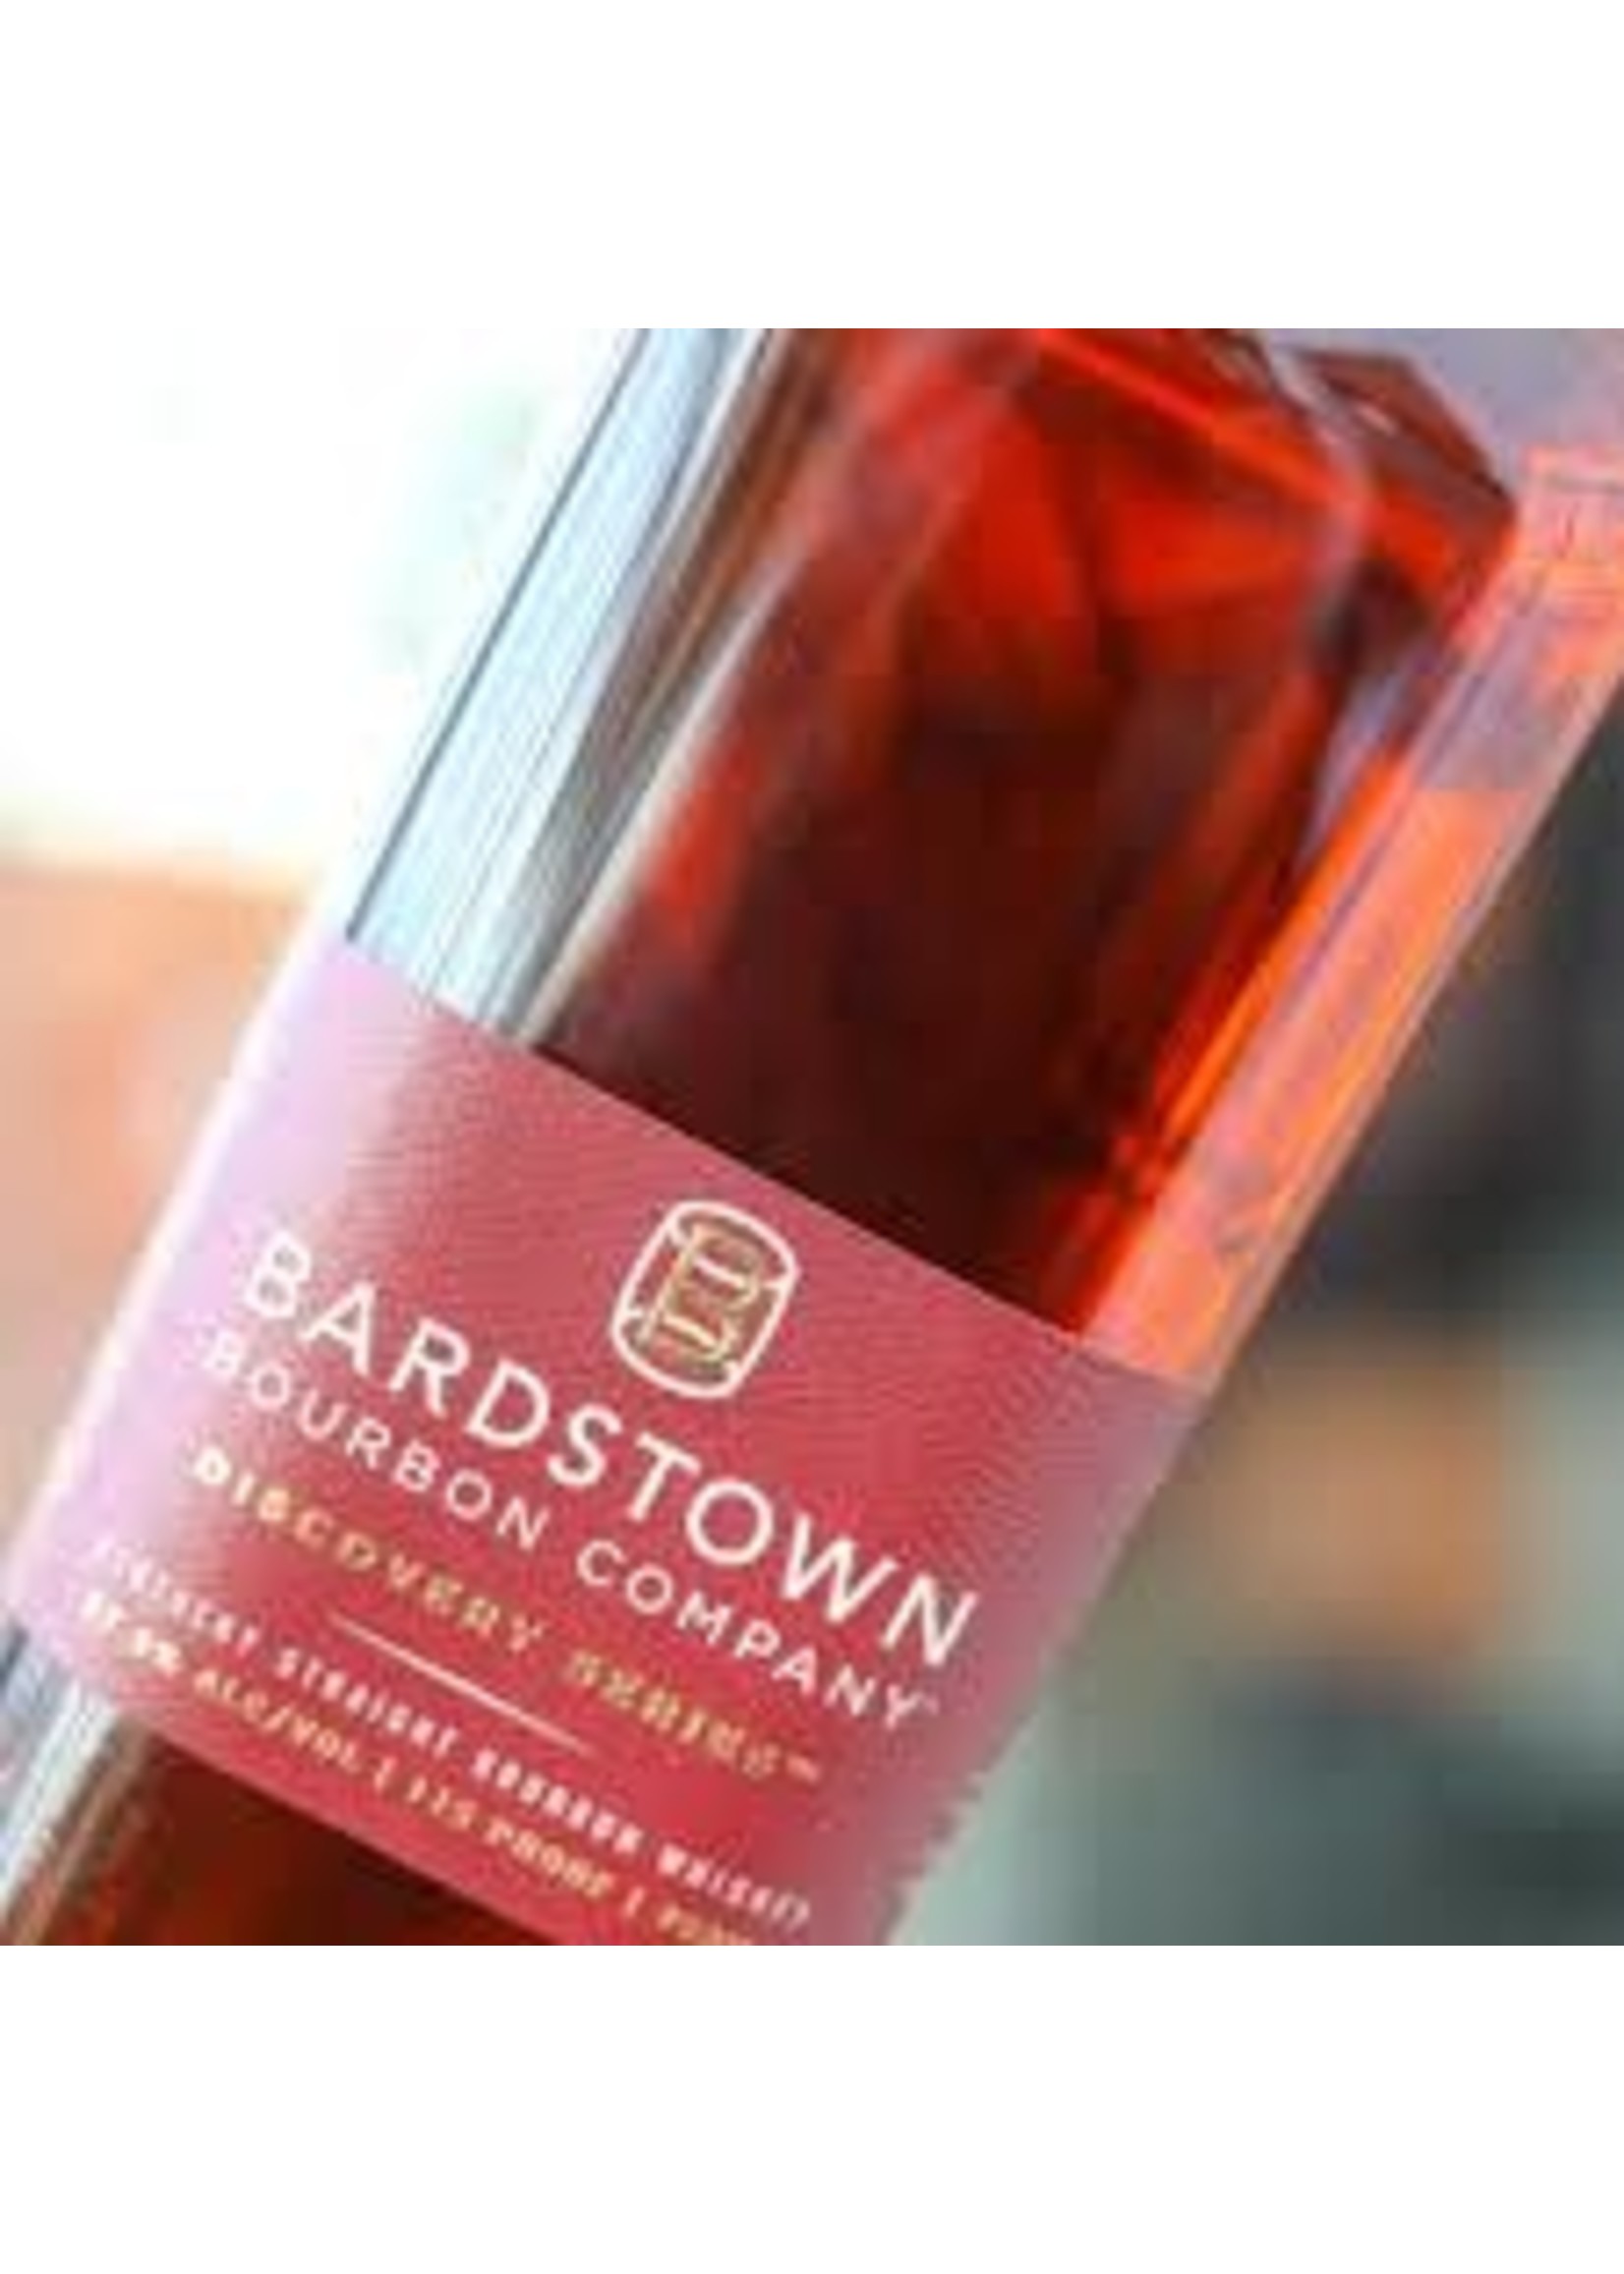 Bardstown Kentucky Straight Bourbon Discovery Series #7 750ml